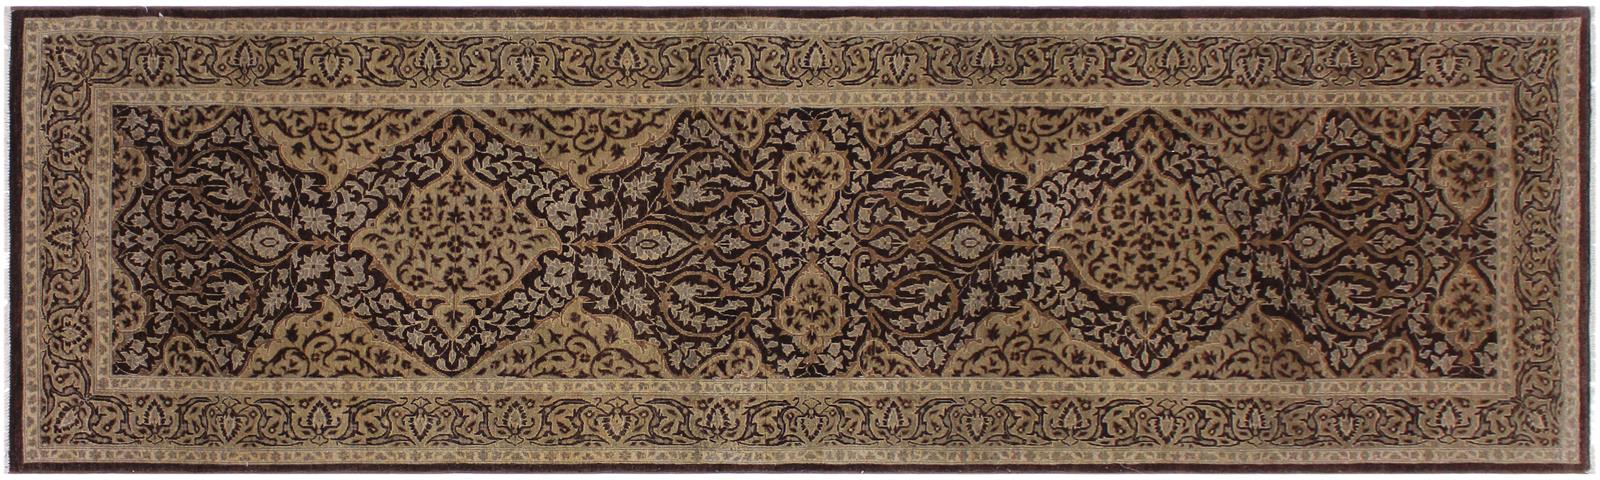 handmade Transitional Veg Dye Brown Gray Hand Knotted RUNNER 100% WOOL area rug 3x11